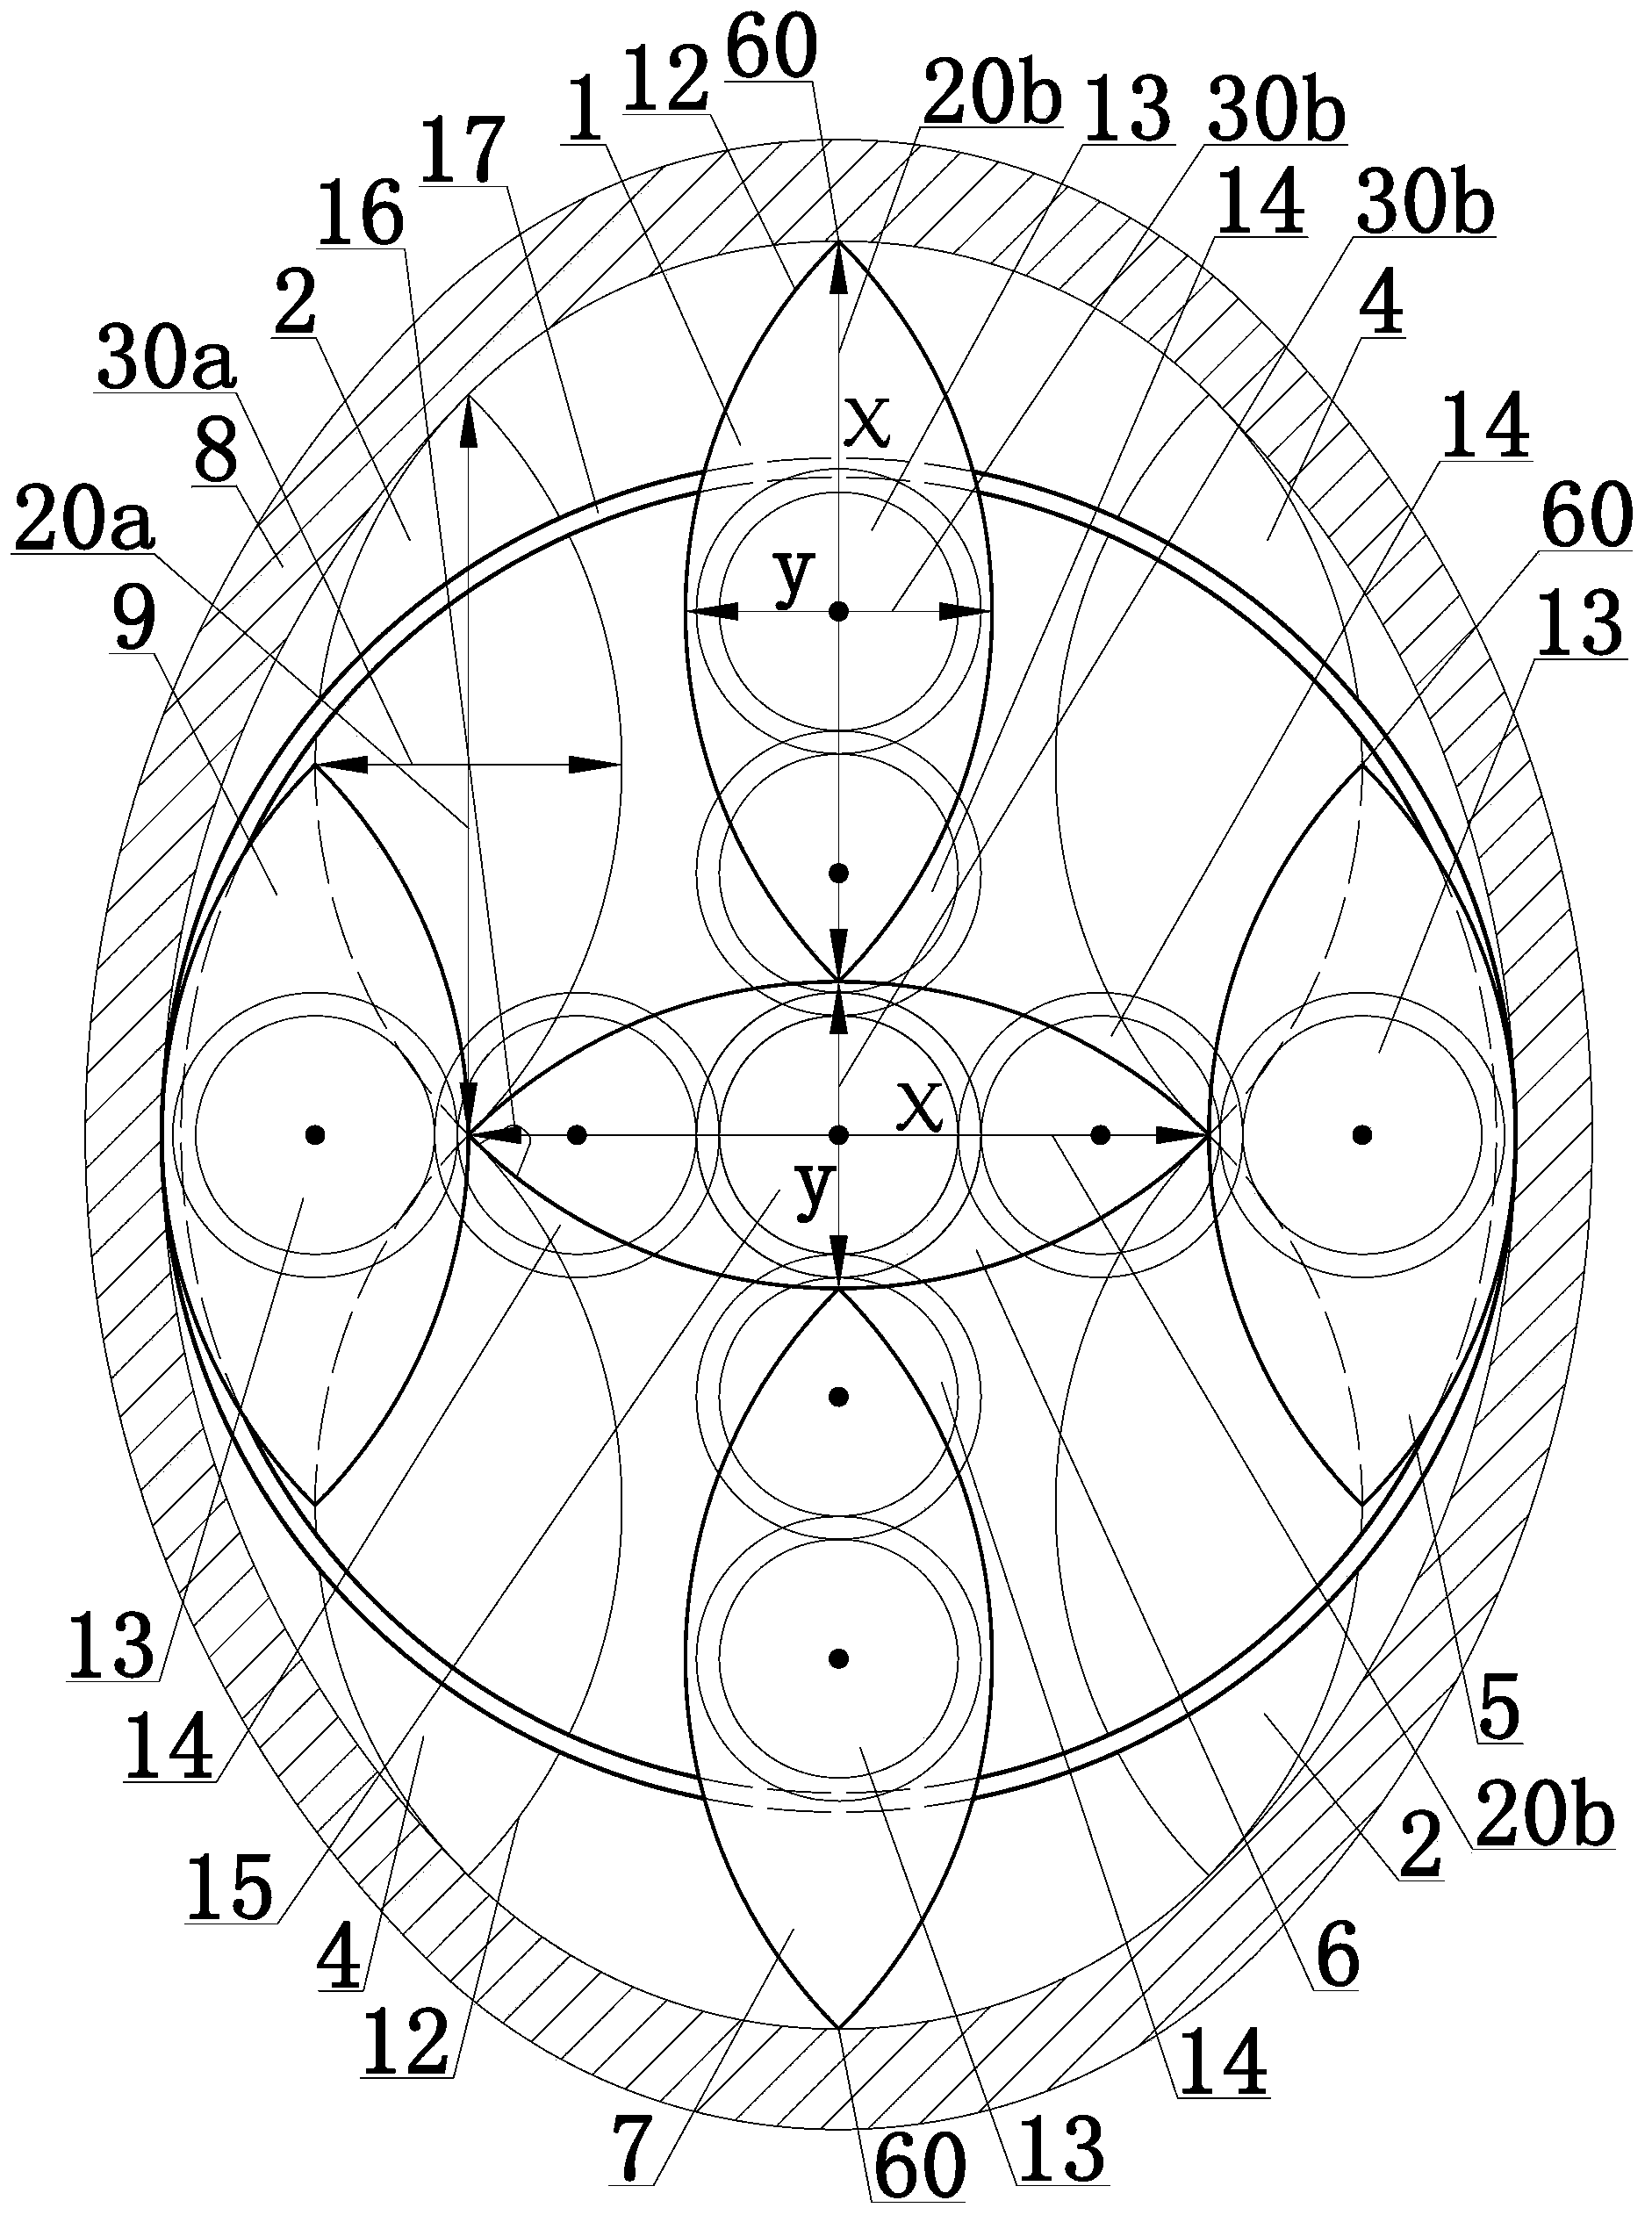 Rotor fluid mechanical transfiguration mechanism